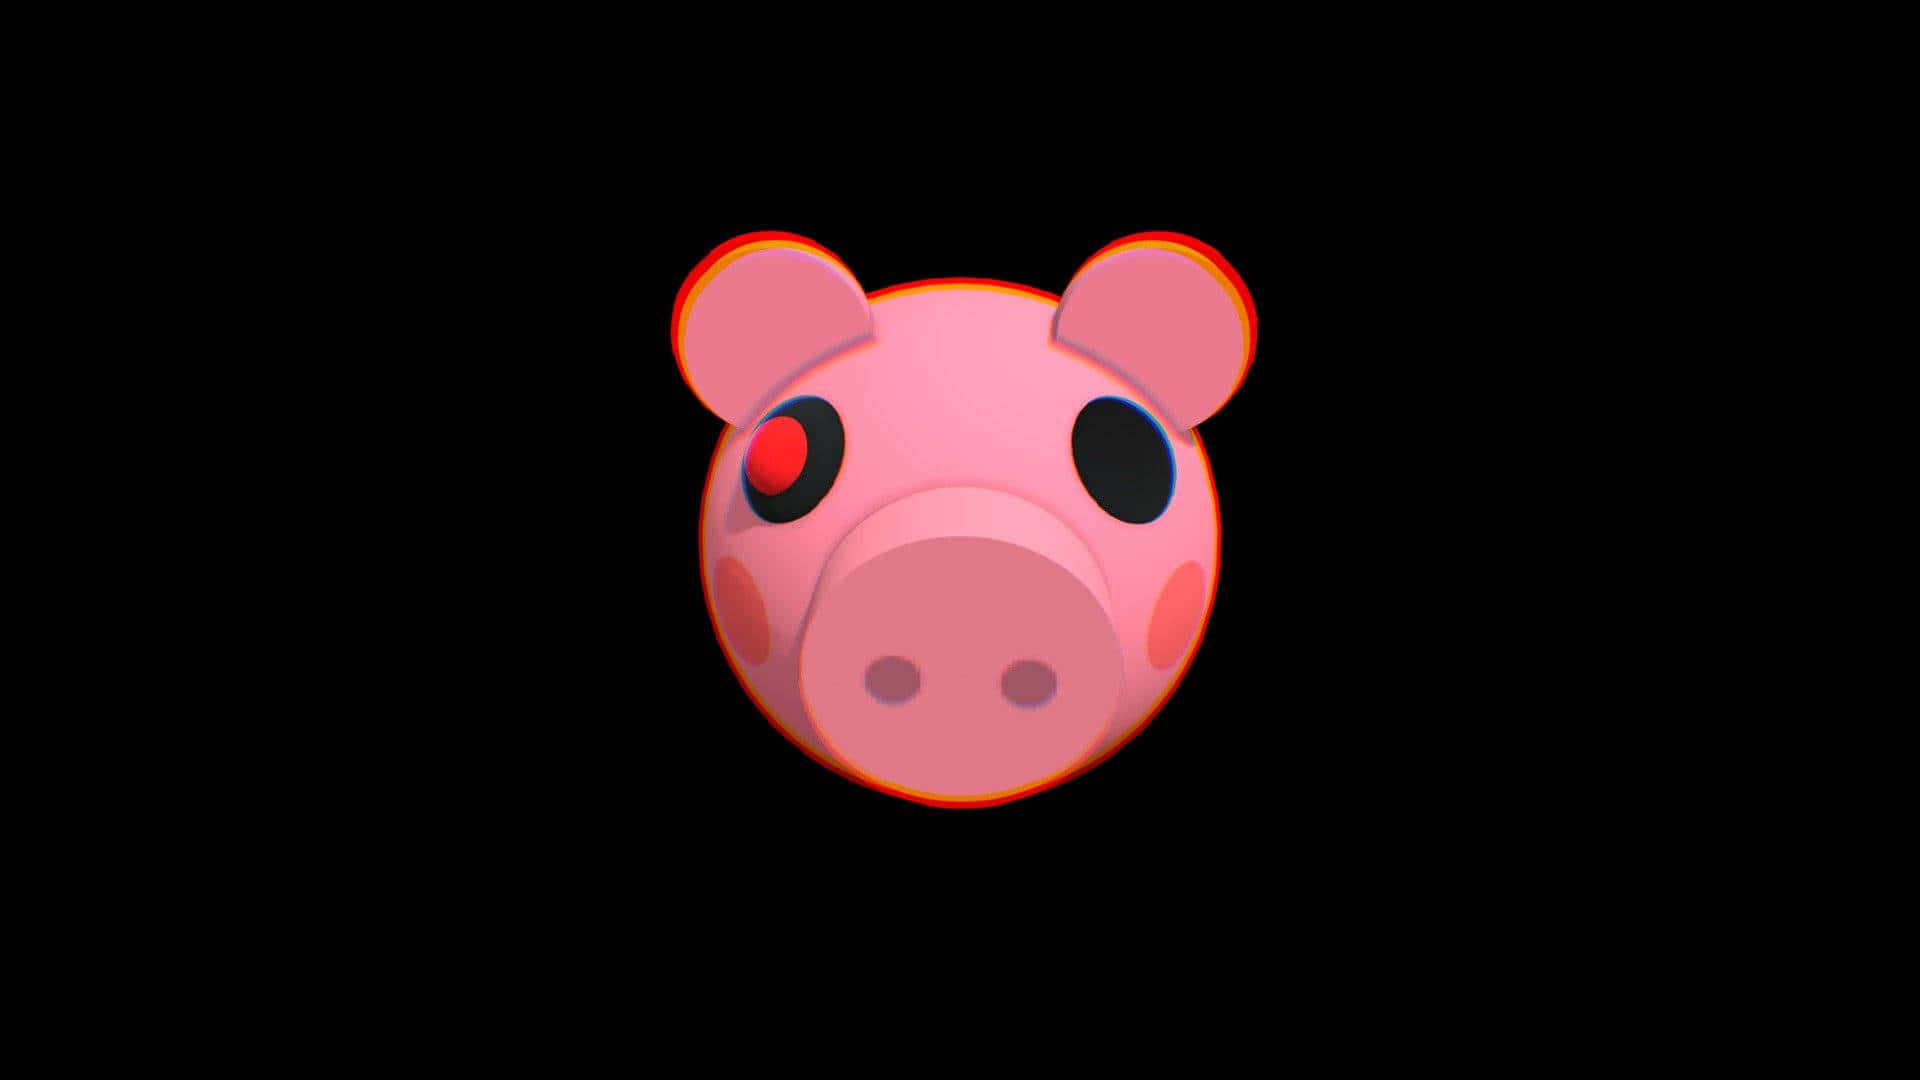 Atvinde Den Finansielle Kapløb Med Piggy